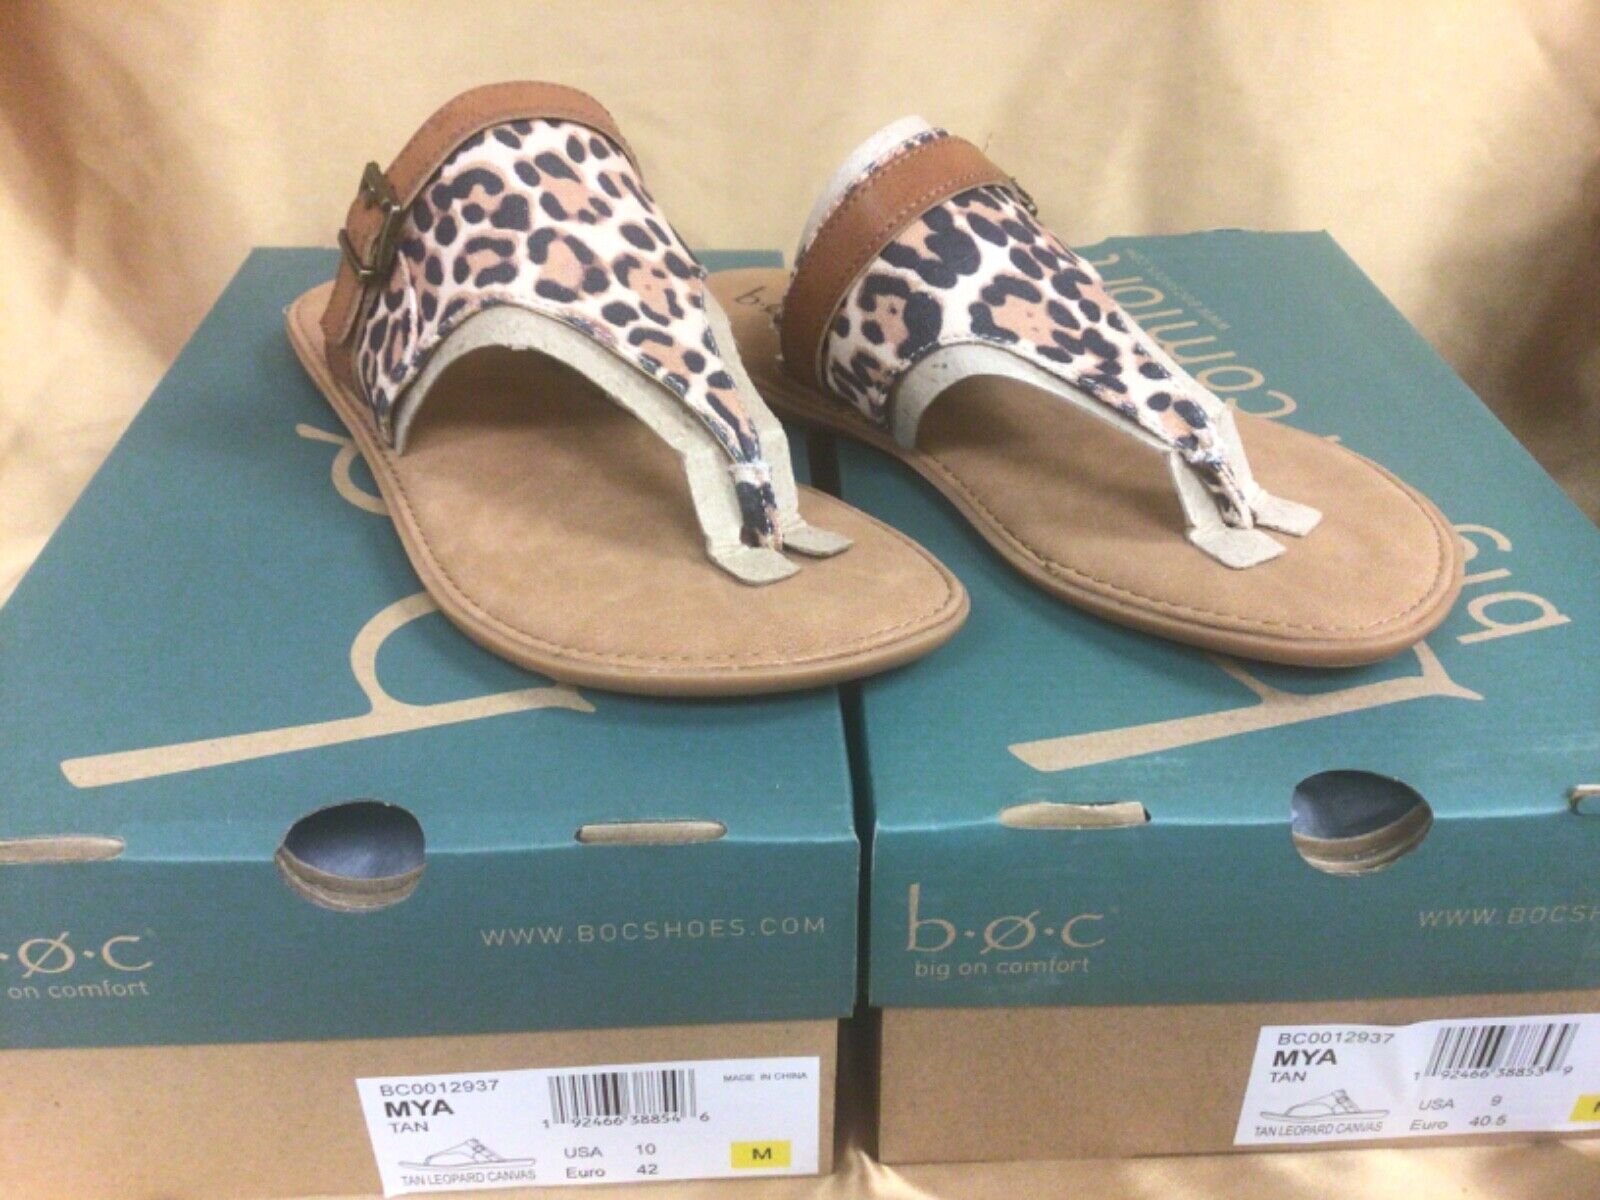 b.o.c. Women's Mya Comfort Sandal Women's Shoes SIZE 9M or 10M N